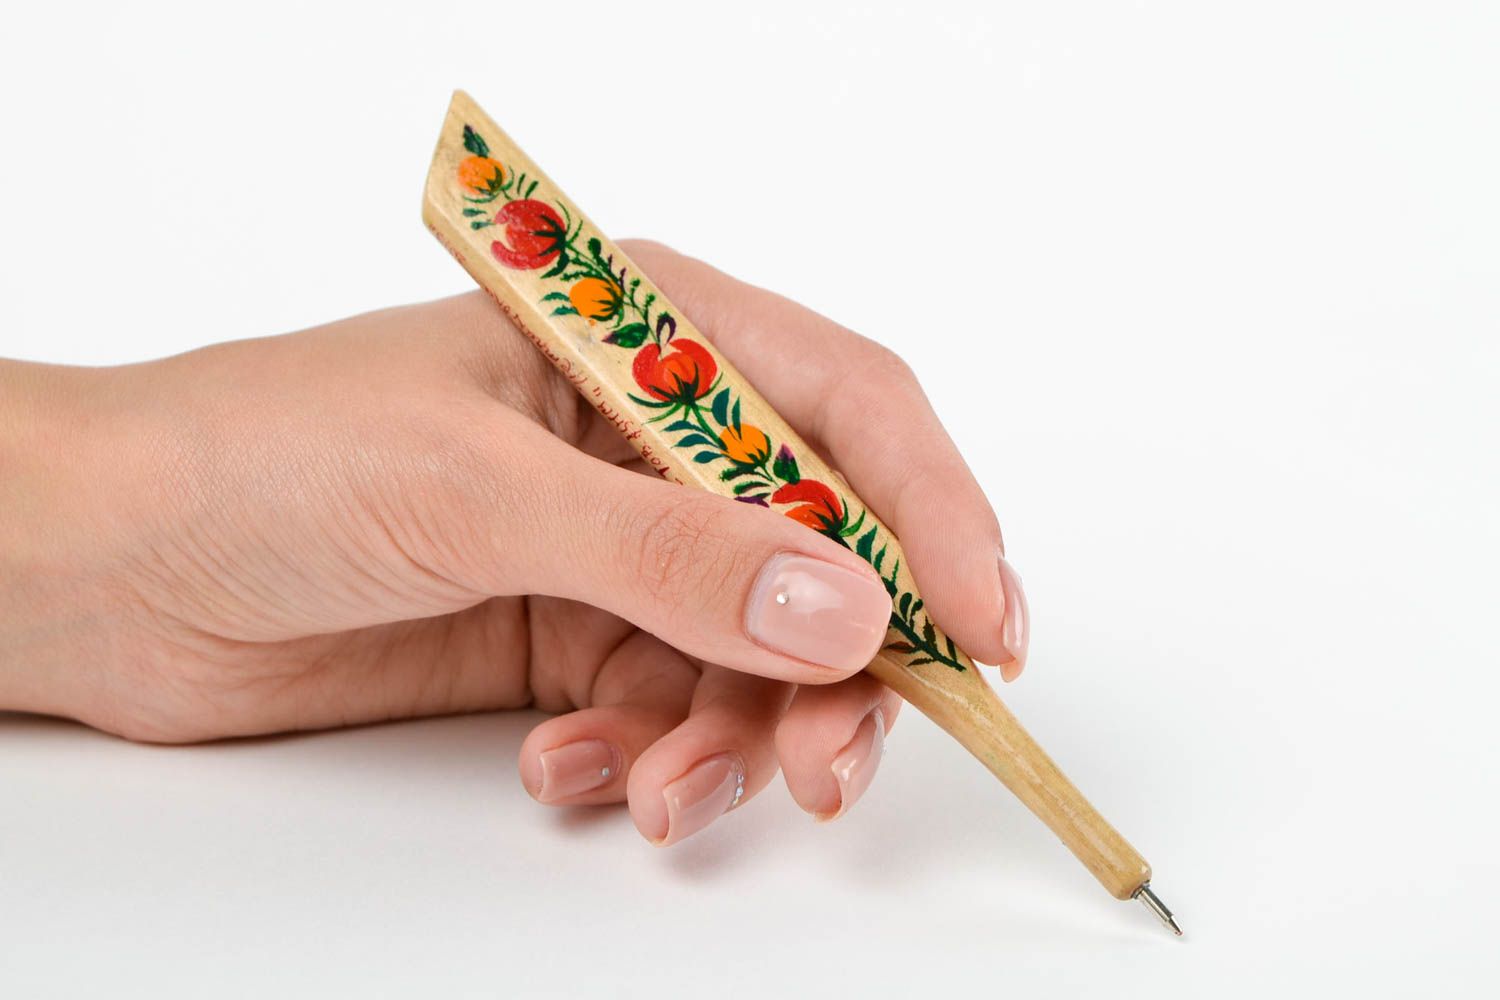 Handmade pen wooden pen unusual pen for writing unusual wooden pen gift ideas photo 2